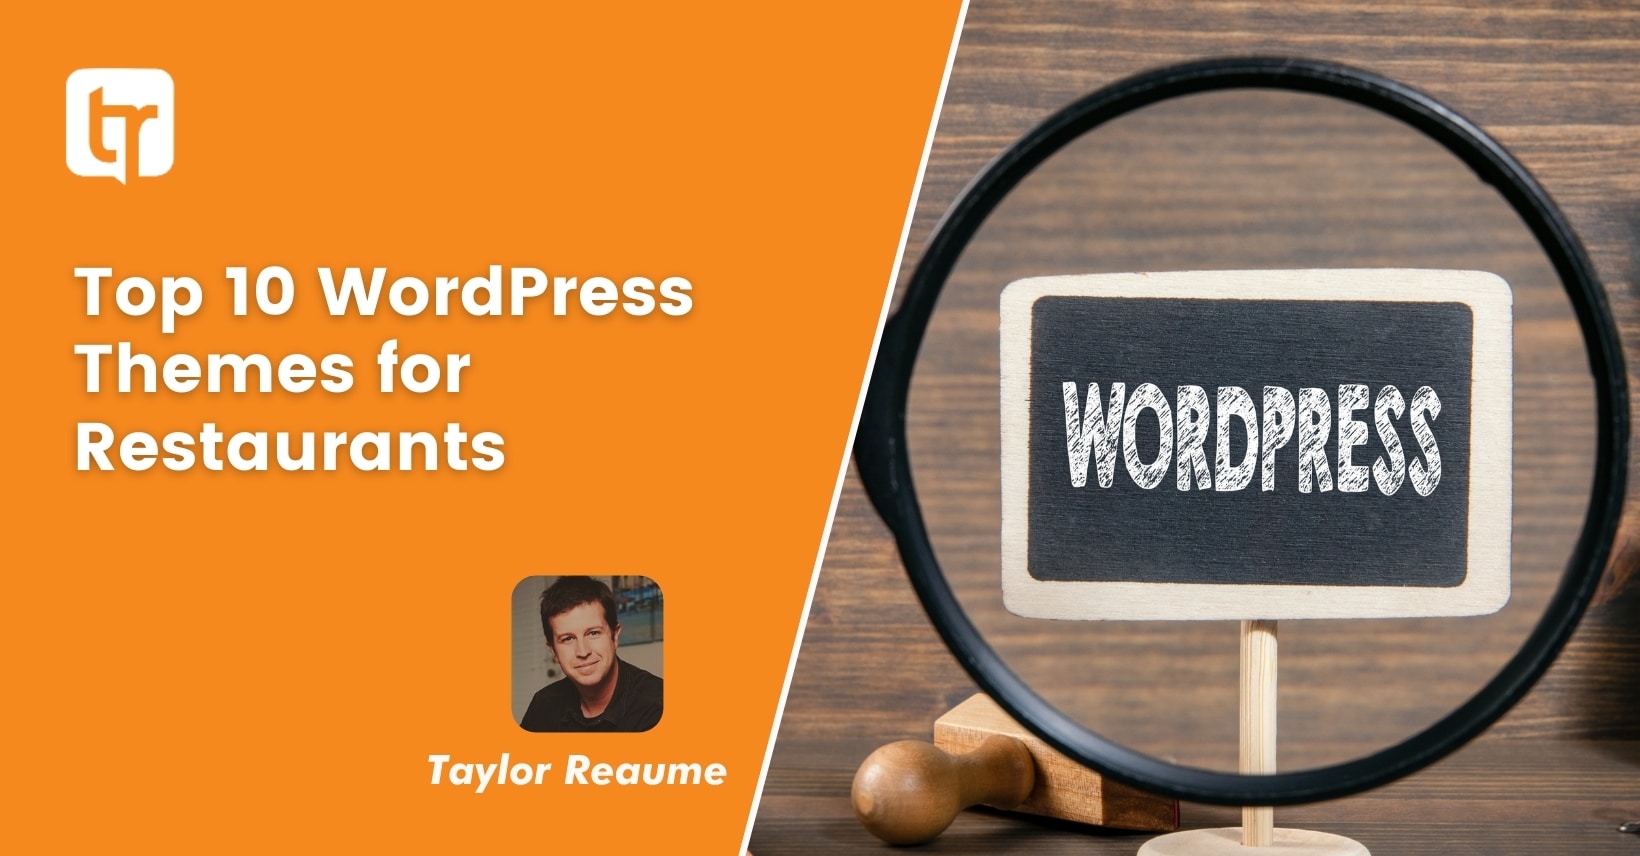 Top 10 WordPress Themes for Restaurants